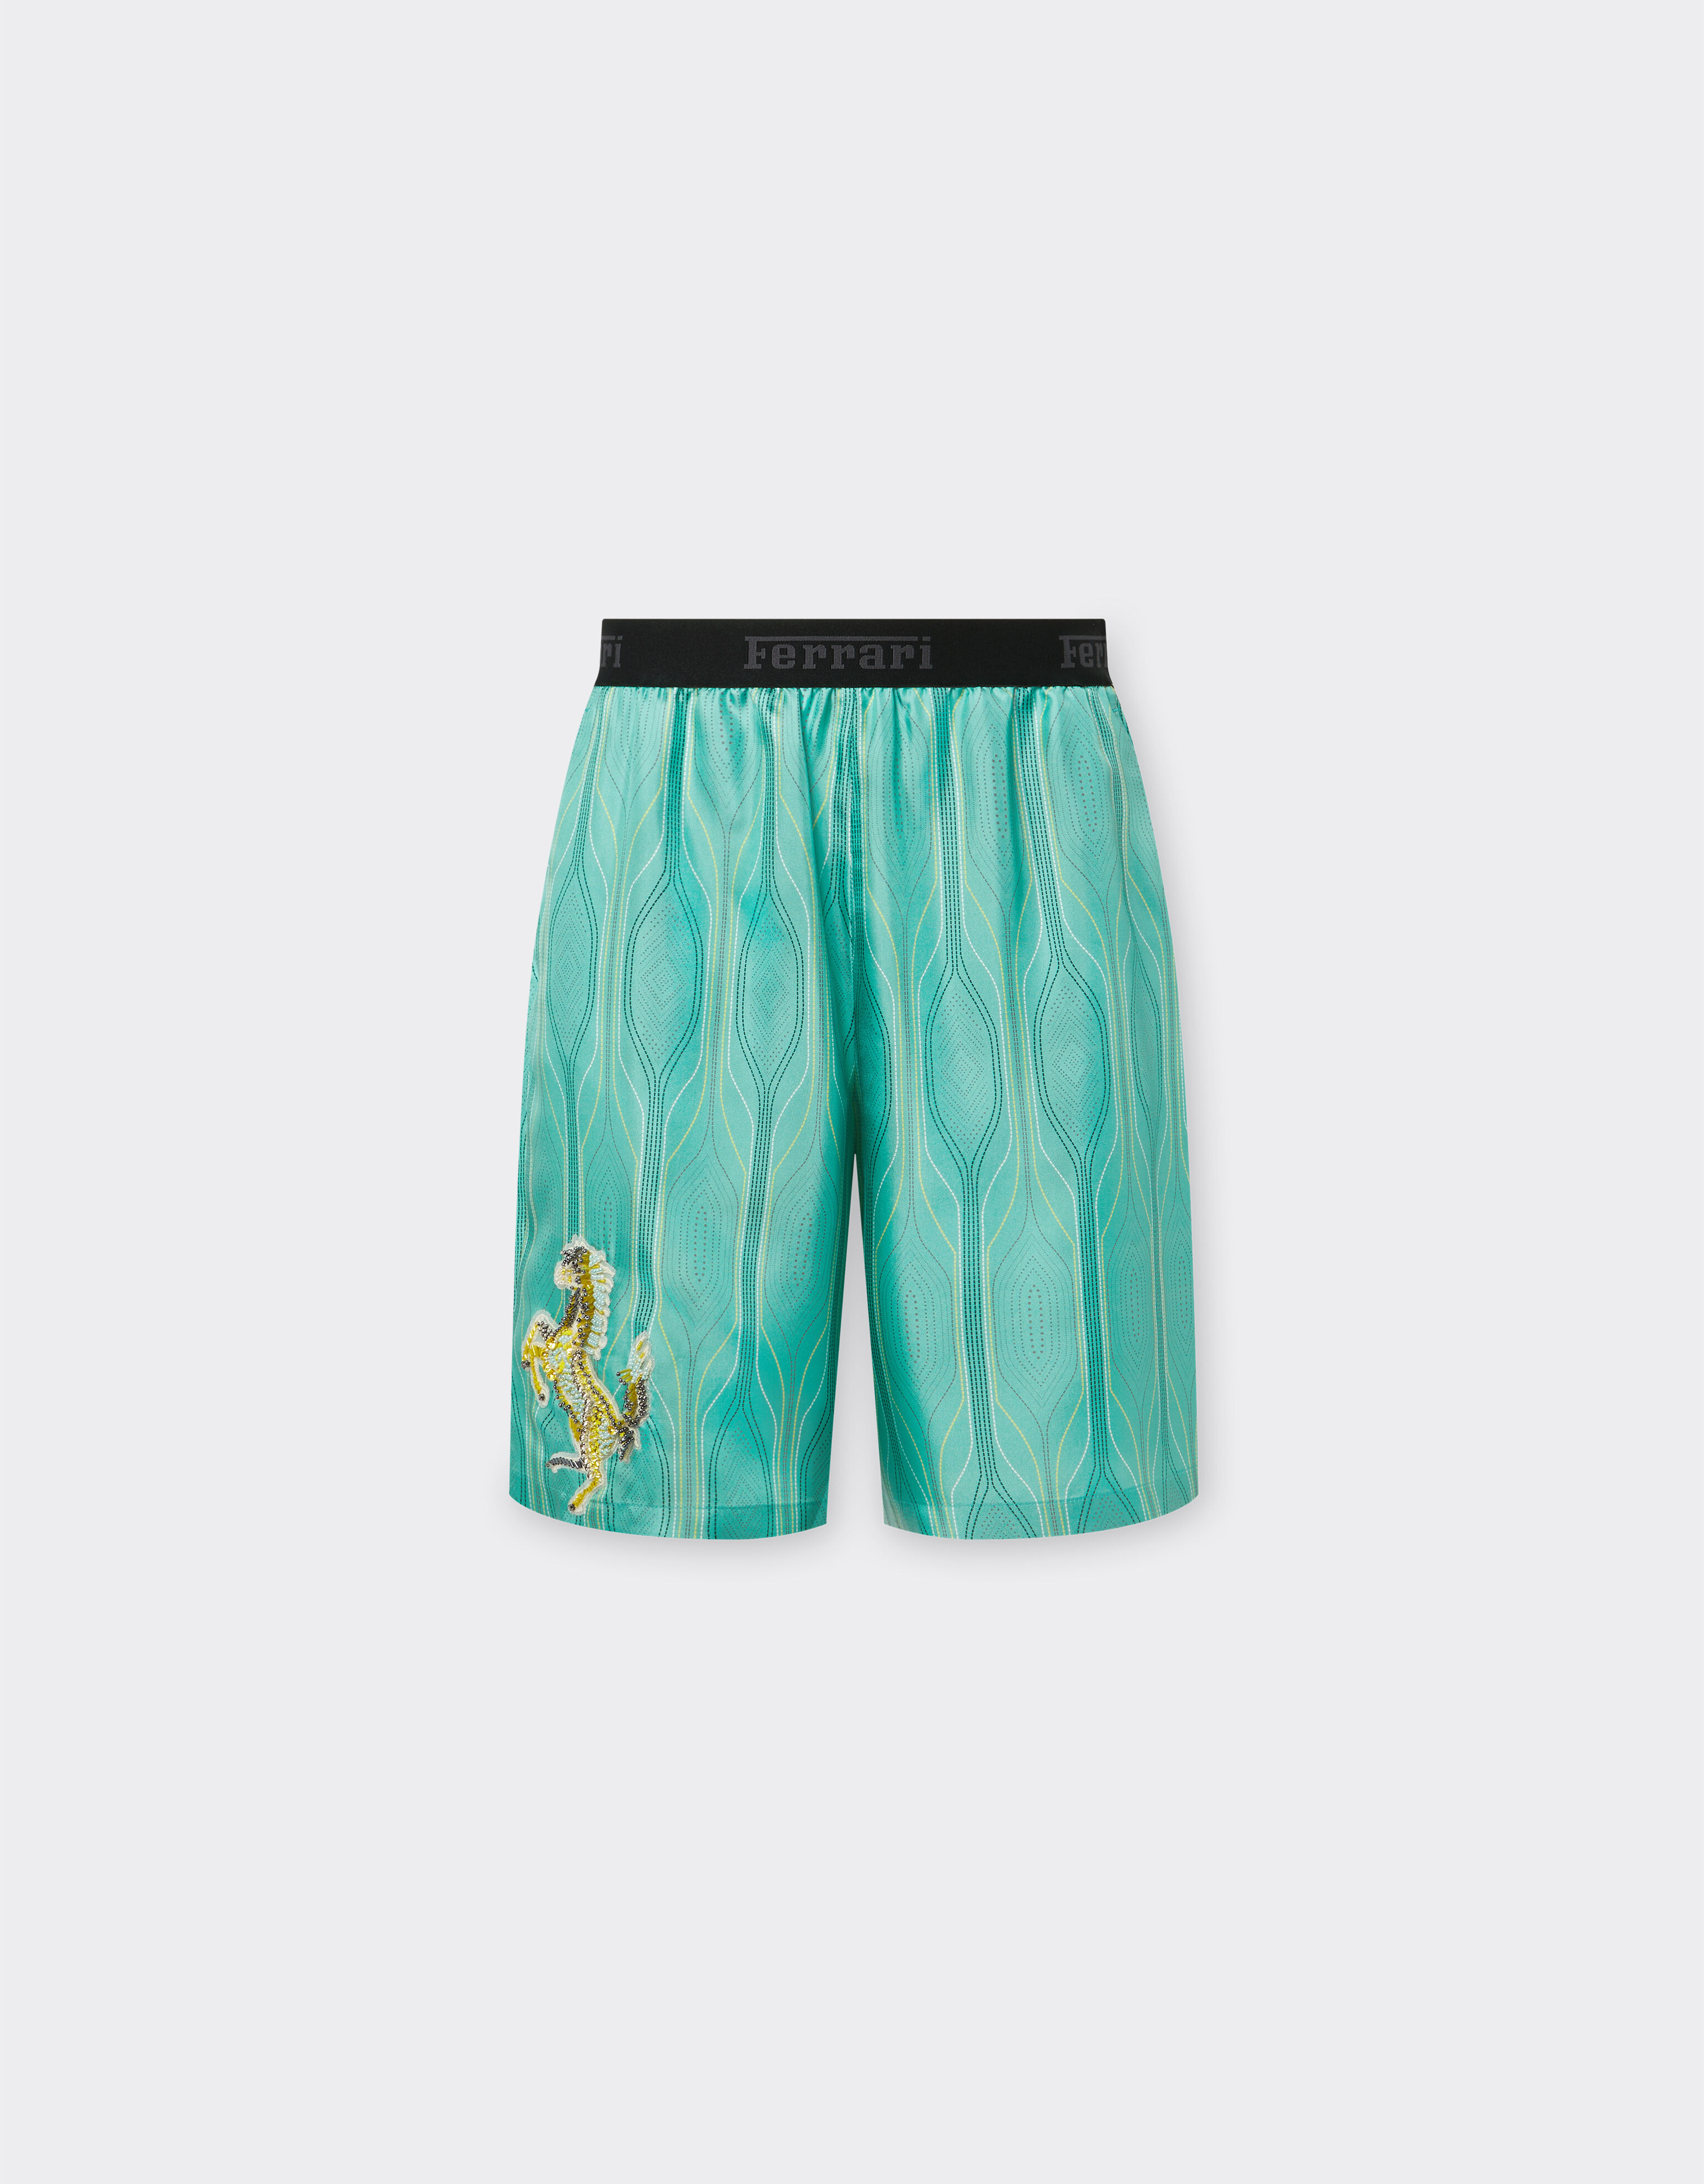 Ferrari Miami Collection silk shorts Aquamarine 21229f